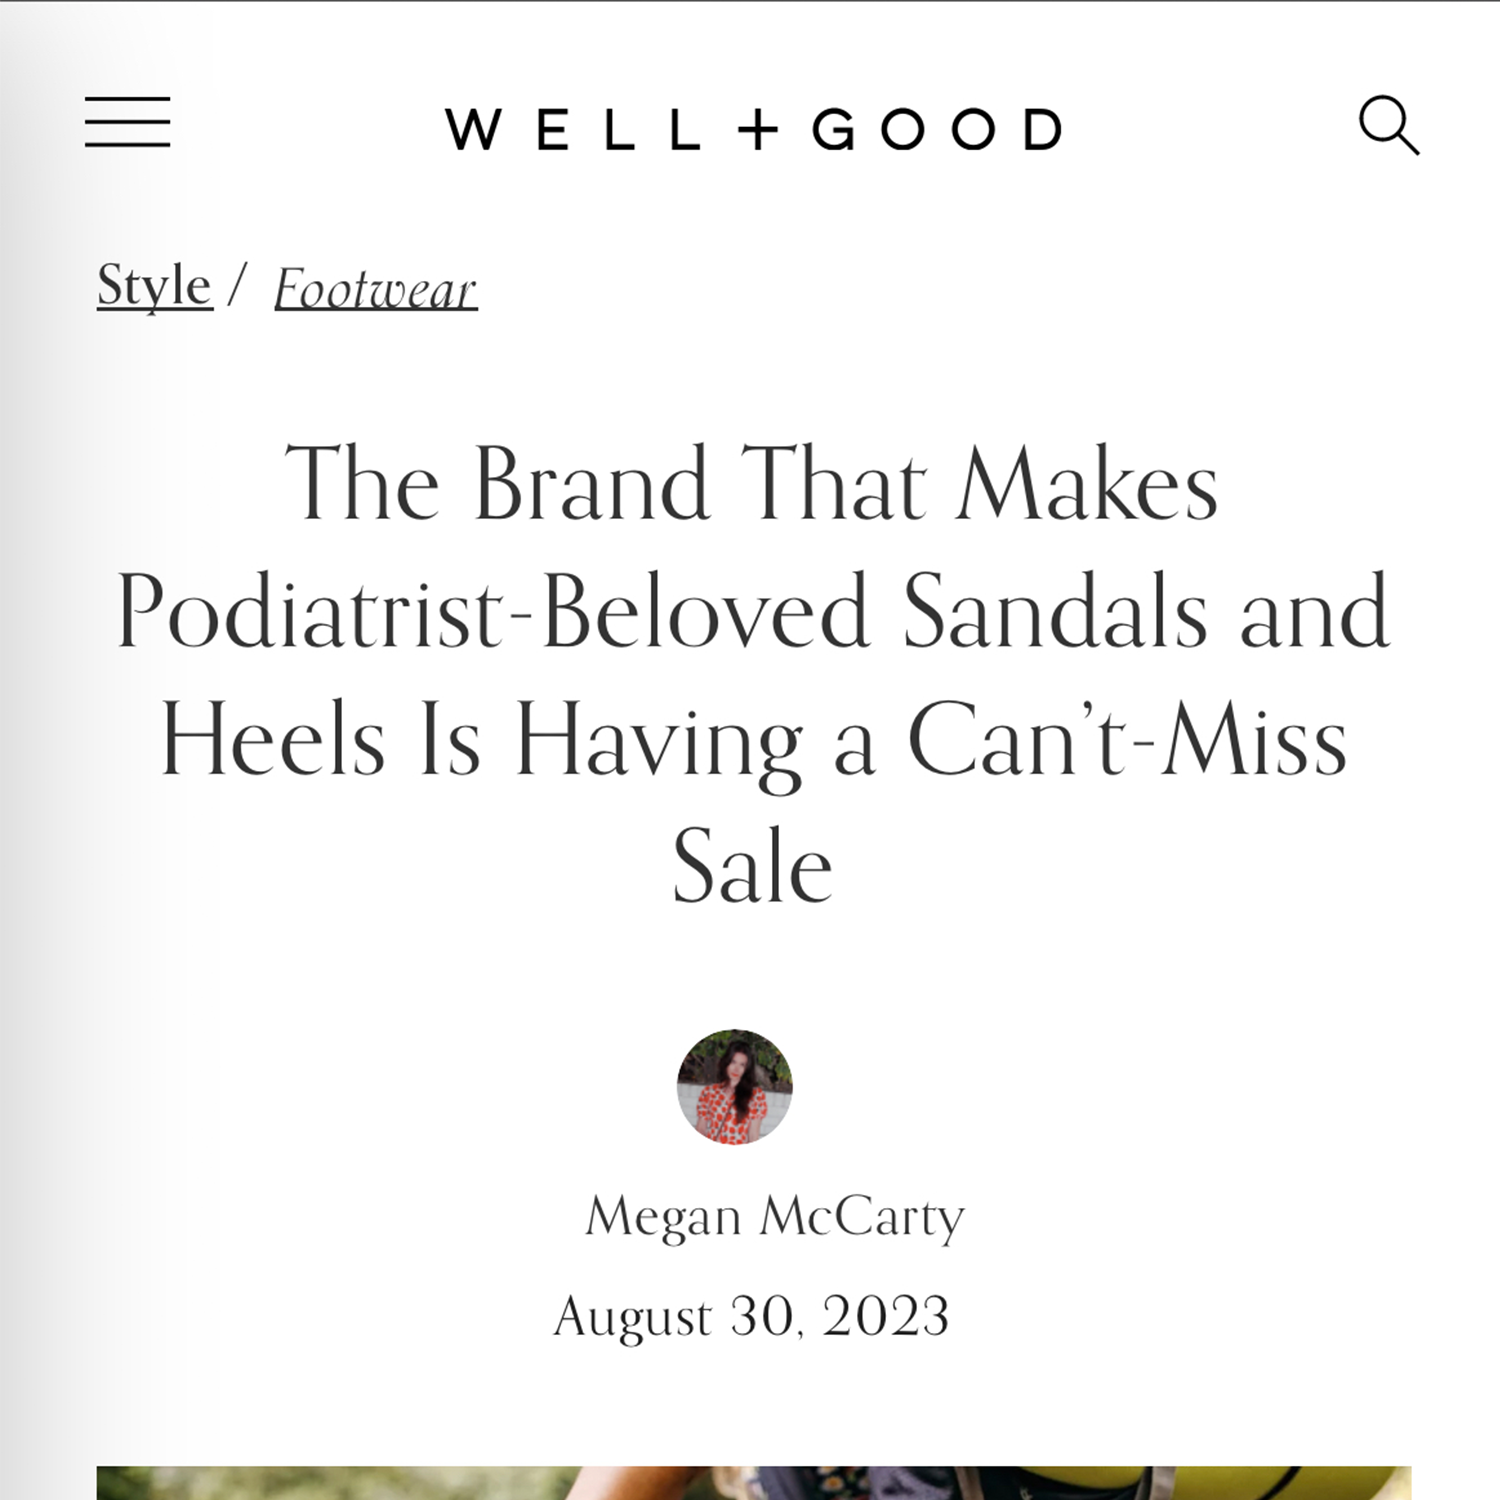 Well + Good - Podiatrist Beloved Sandals